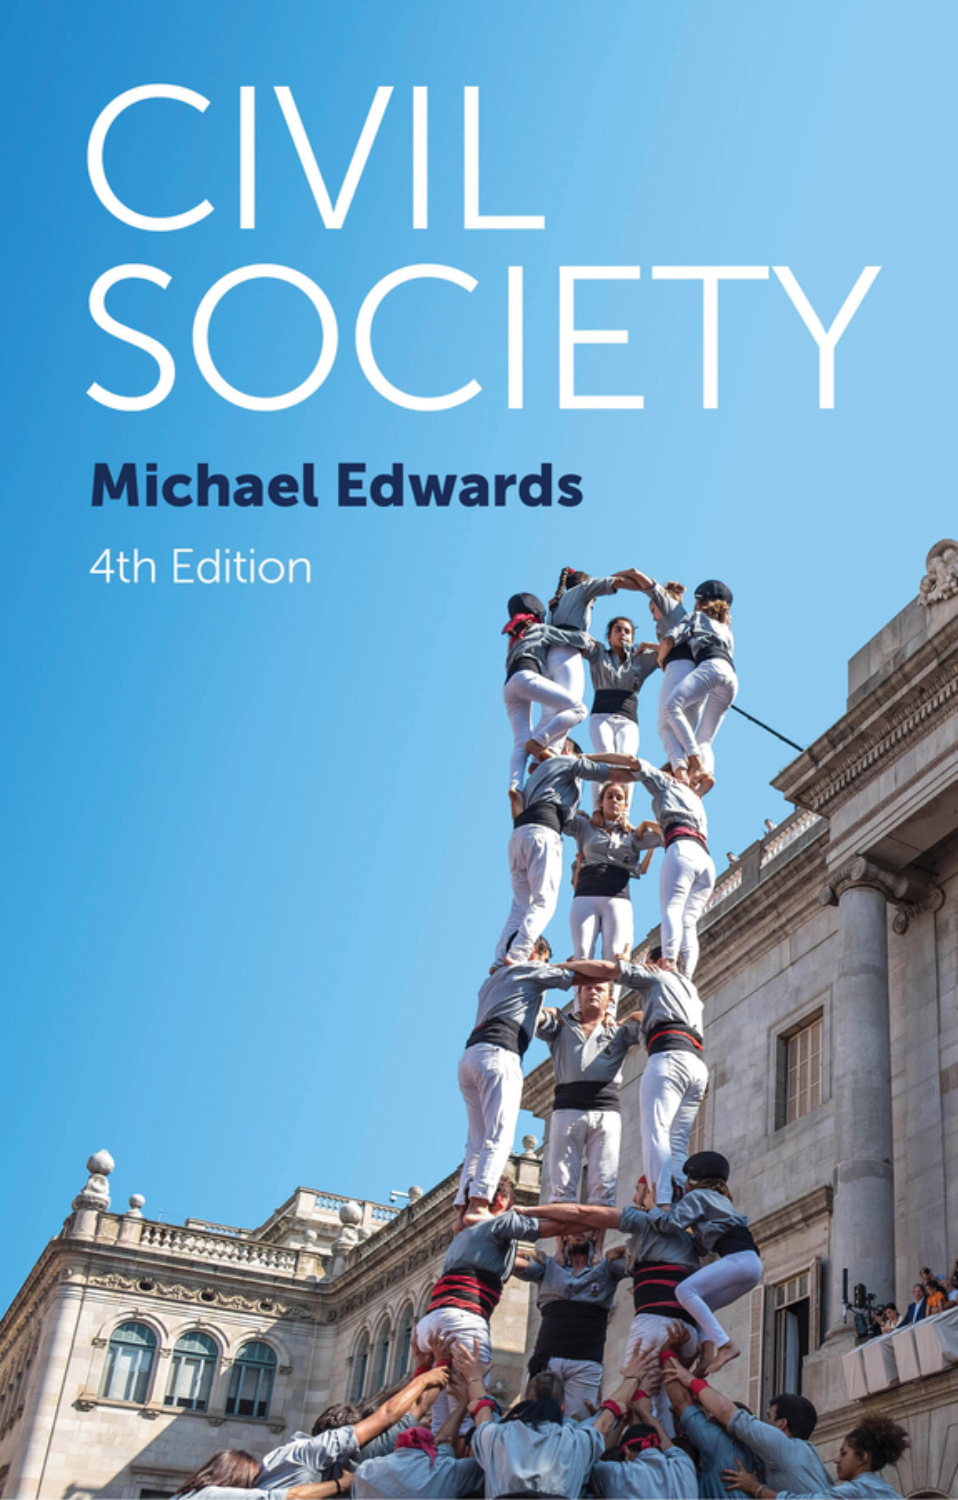 Society 4. Civil Society. Digital Civil Society. Role of Civil Society. Hamilton l. Civil Society: critique and alternative in Global Civil Society and its limits. – London: Palgrave, 2003.